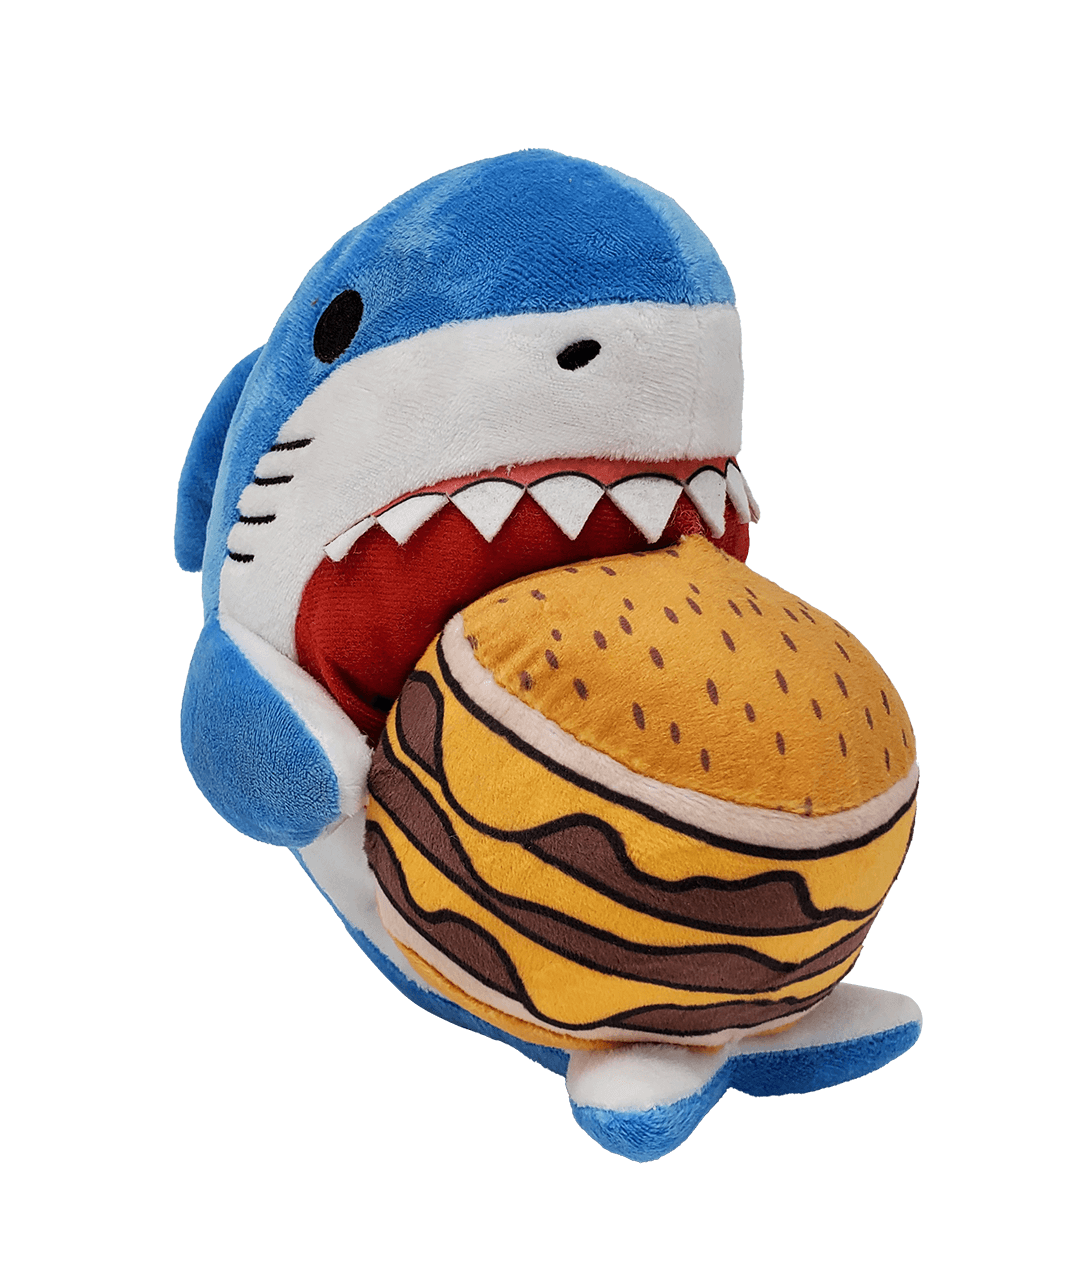 H2o Delirious Cheeseburger Shark Plushie